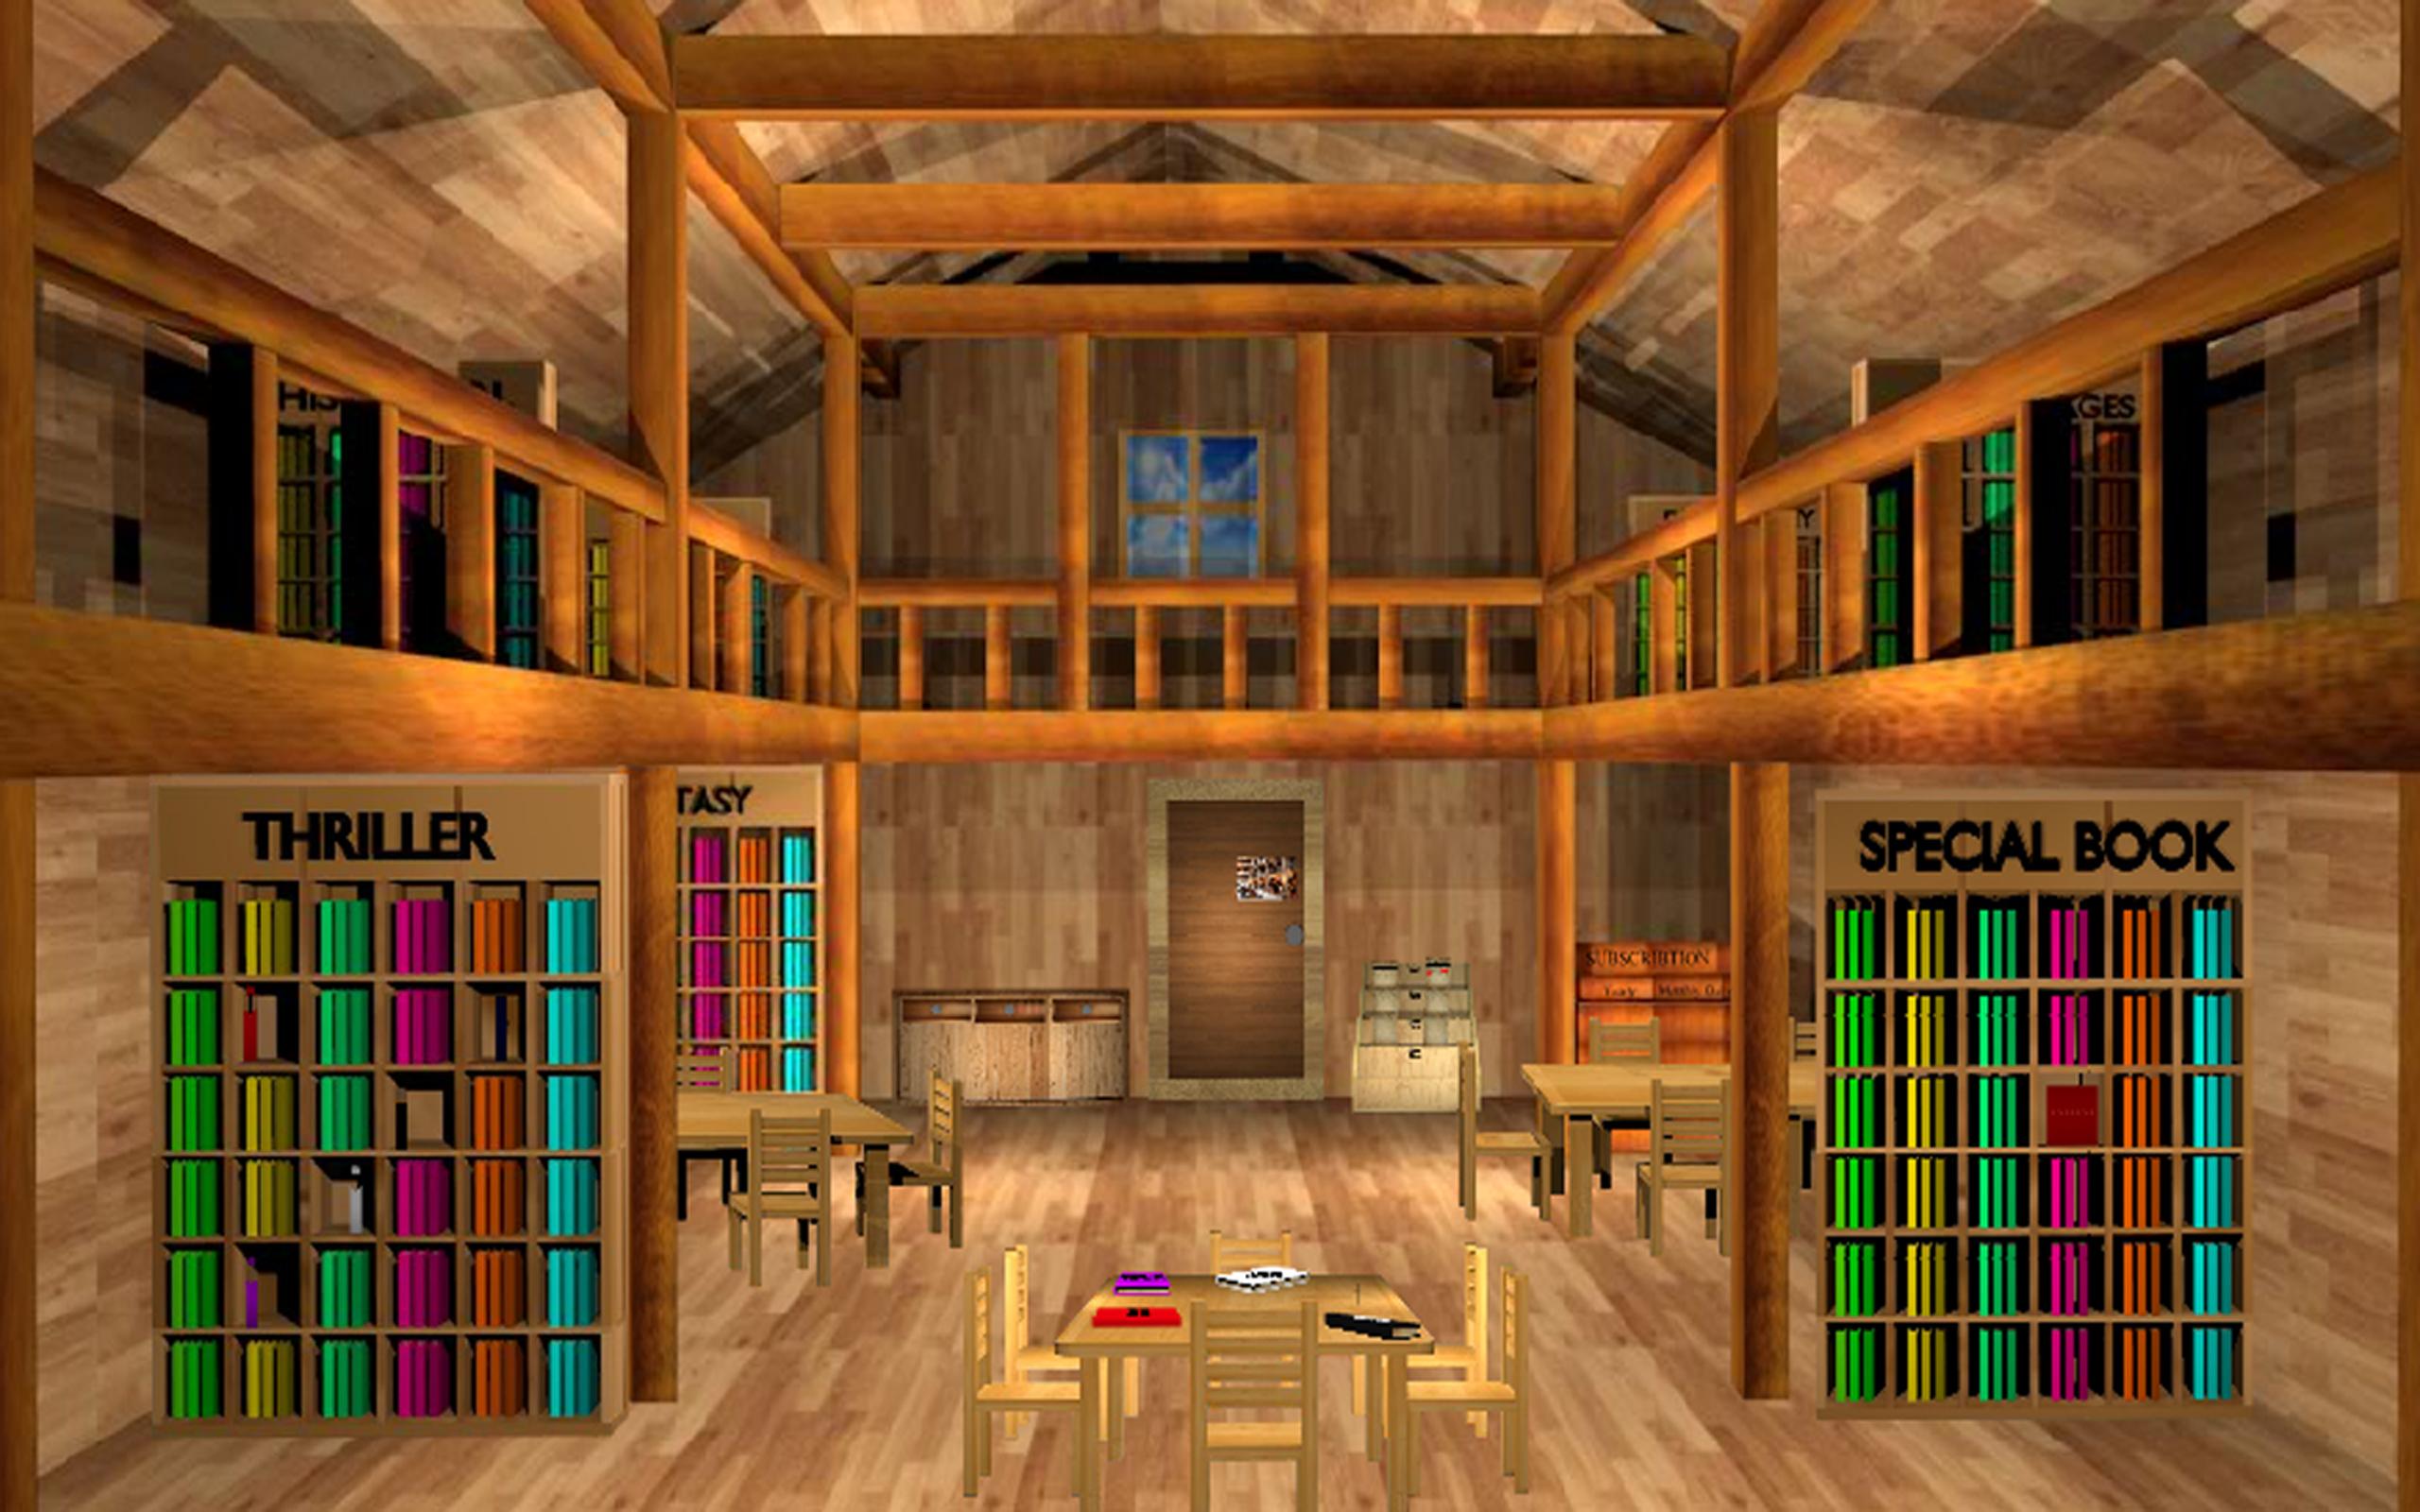 Library игра. Игры в библиотеке. Комната библиотека игра. Escape Library. Головоломка библиотека памяти.